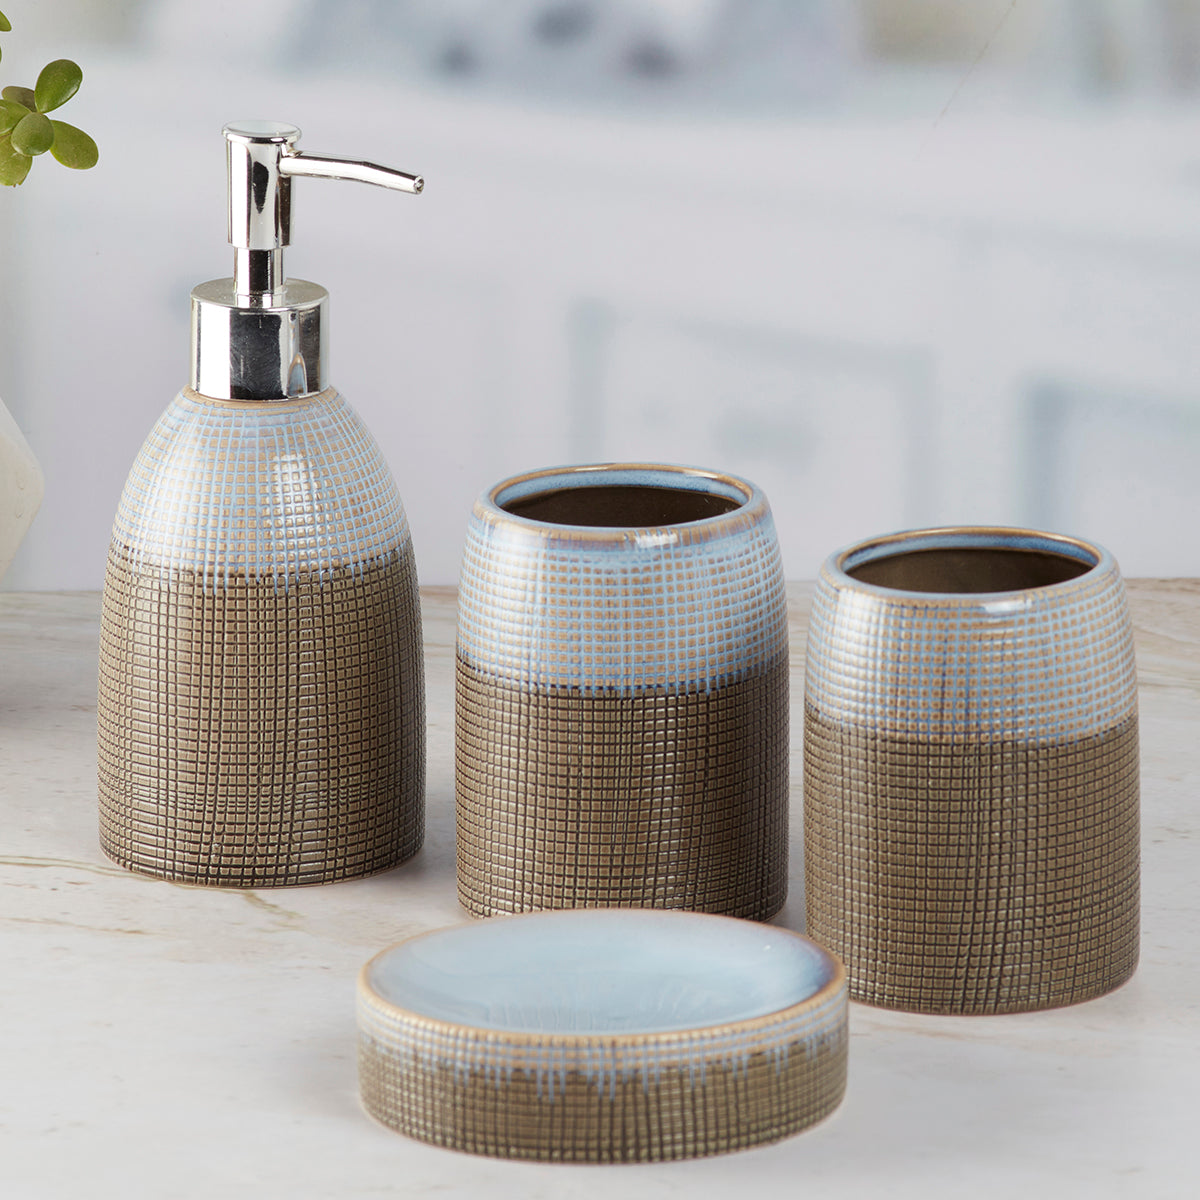 Ceramic Bathroom Accessories Set of 4 Bath Set with Soap Dispenser (8232)